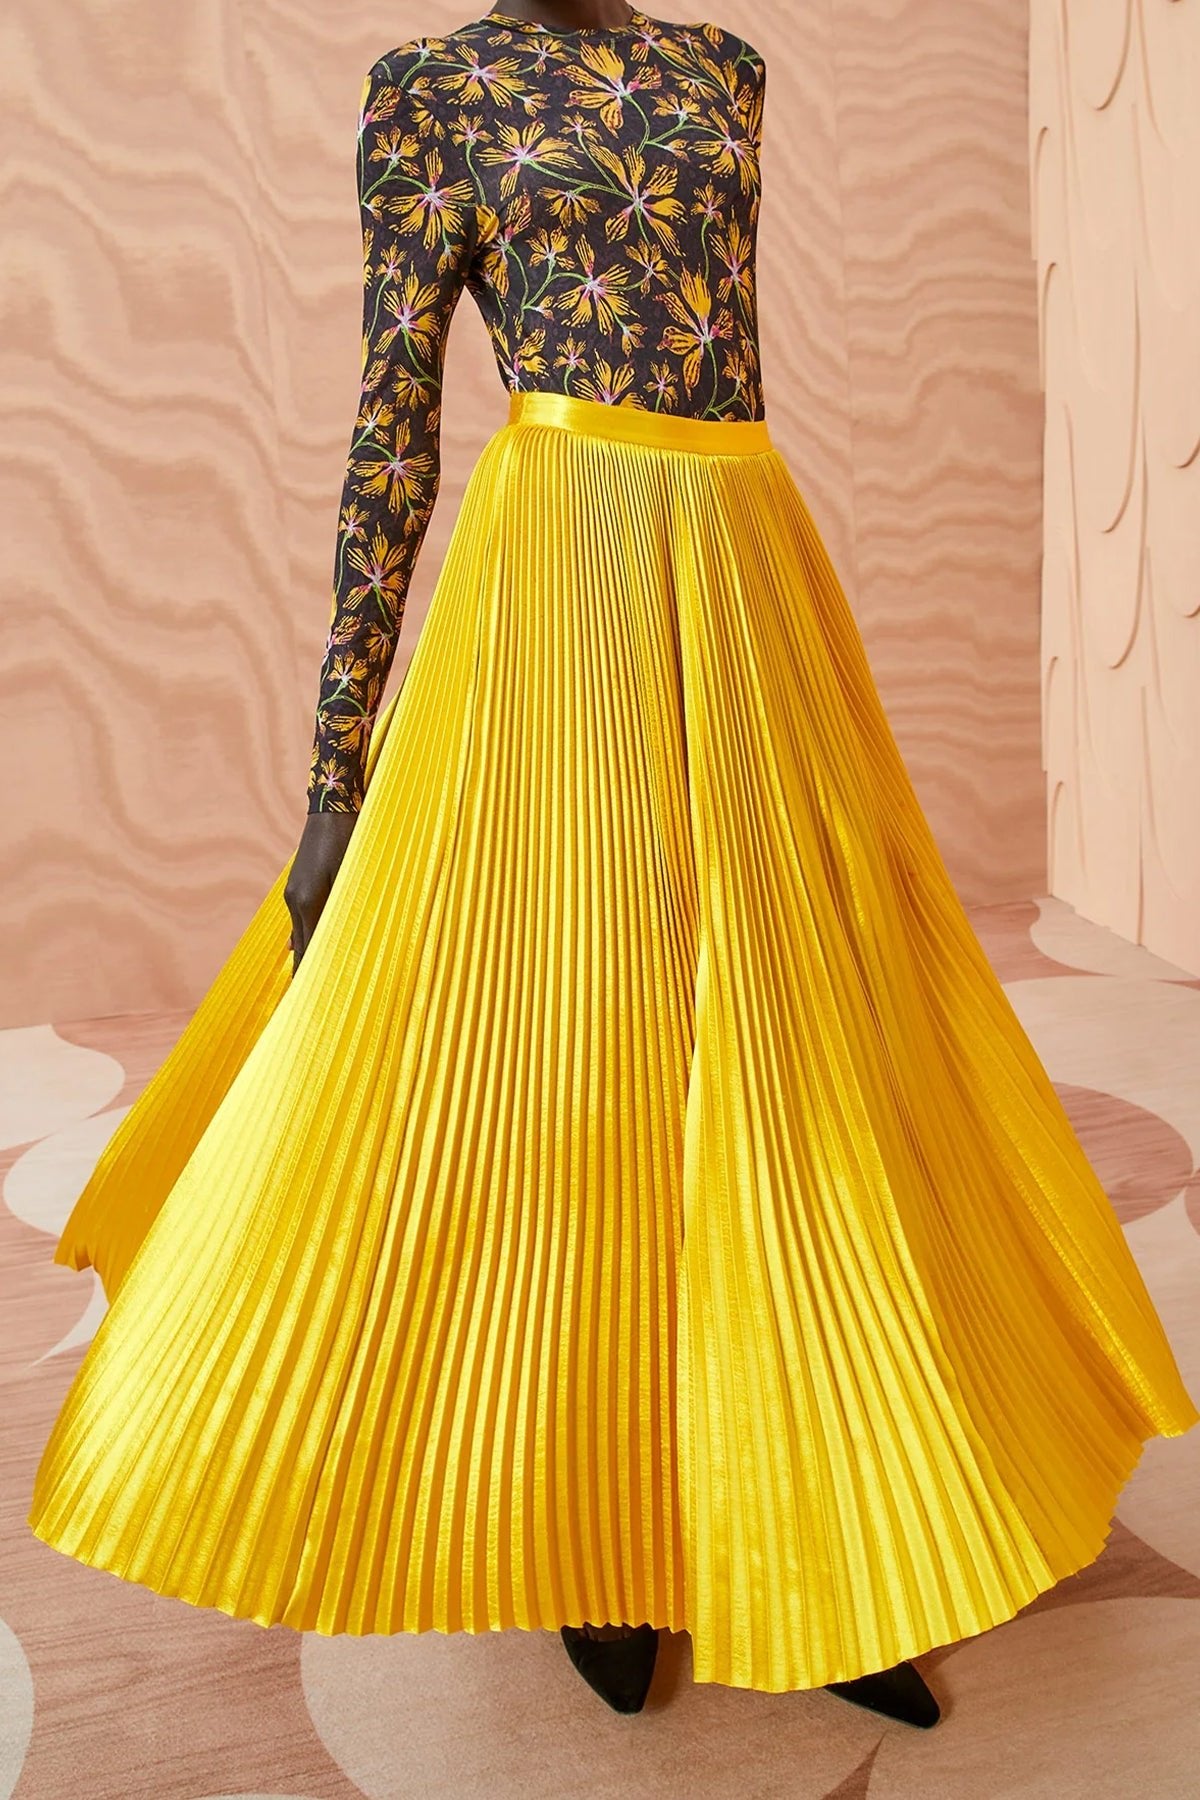 Rami Pleated Satin Maxi Skirt in Sunsprite - shop-olivia.com